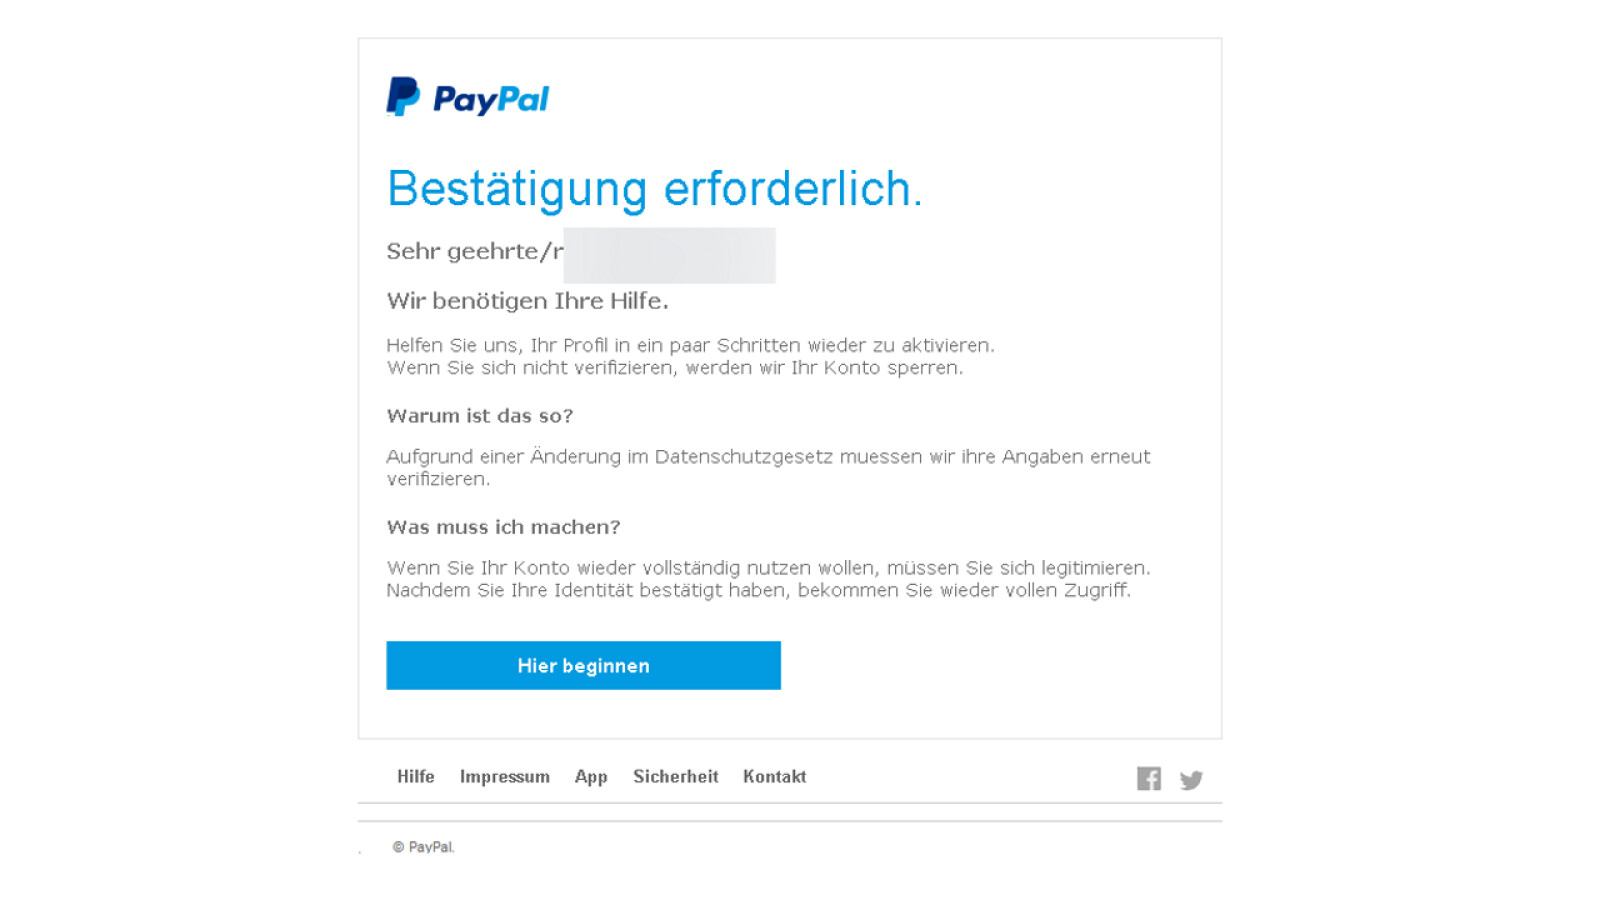 report paypal phishing